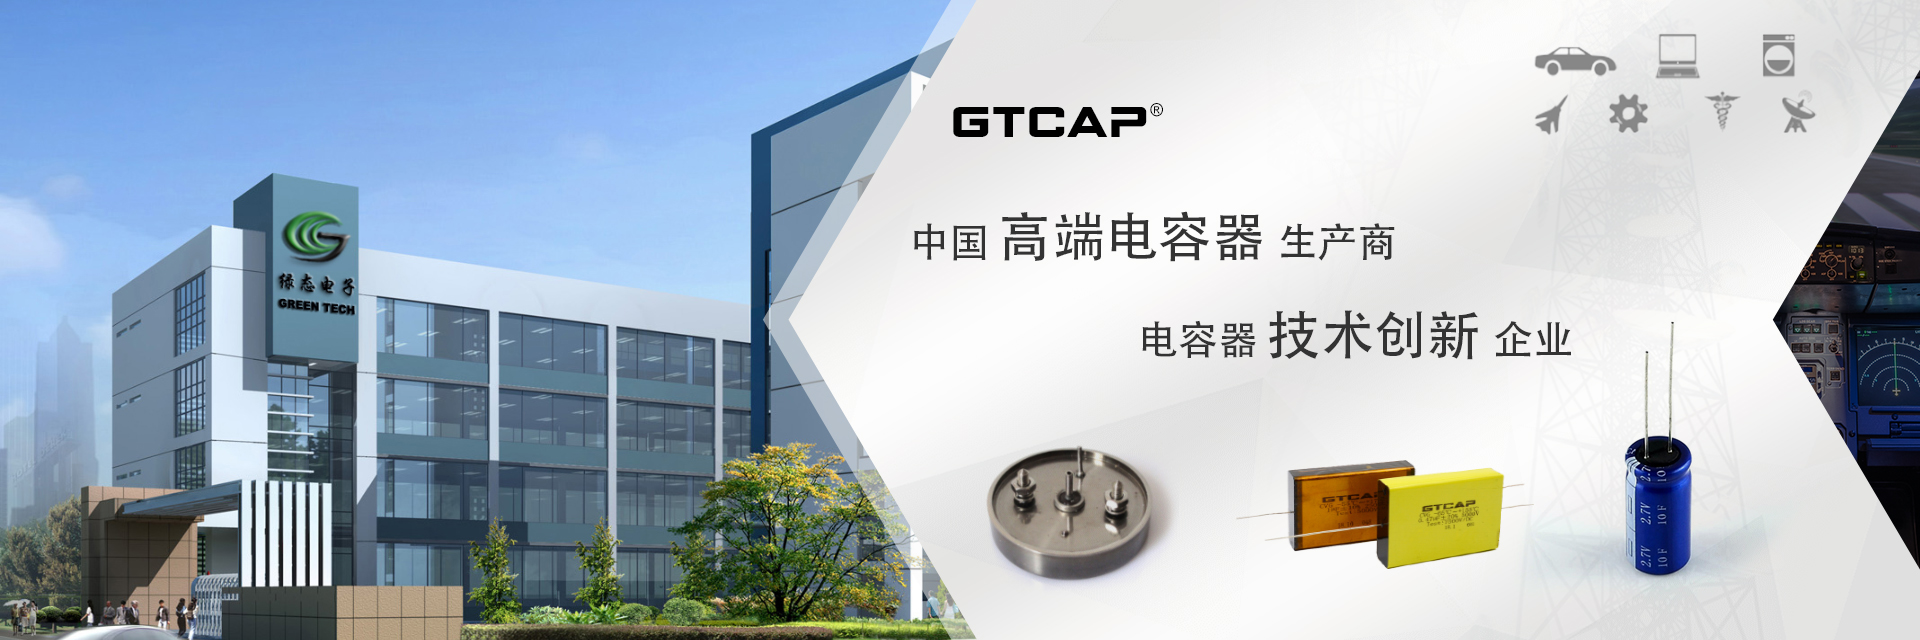 GTCAP factory